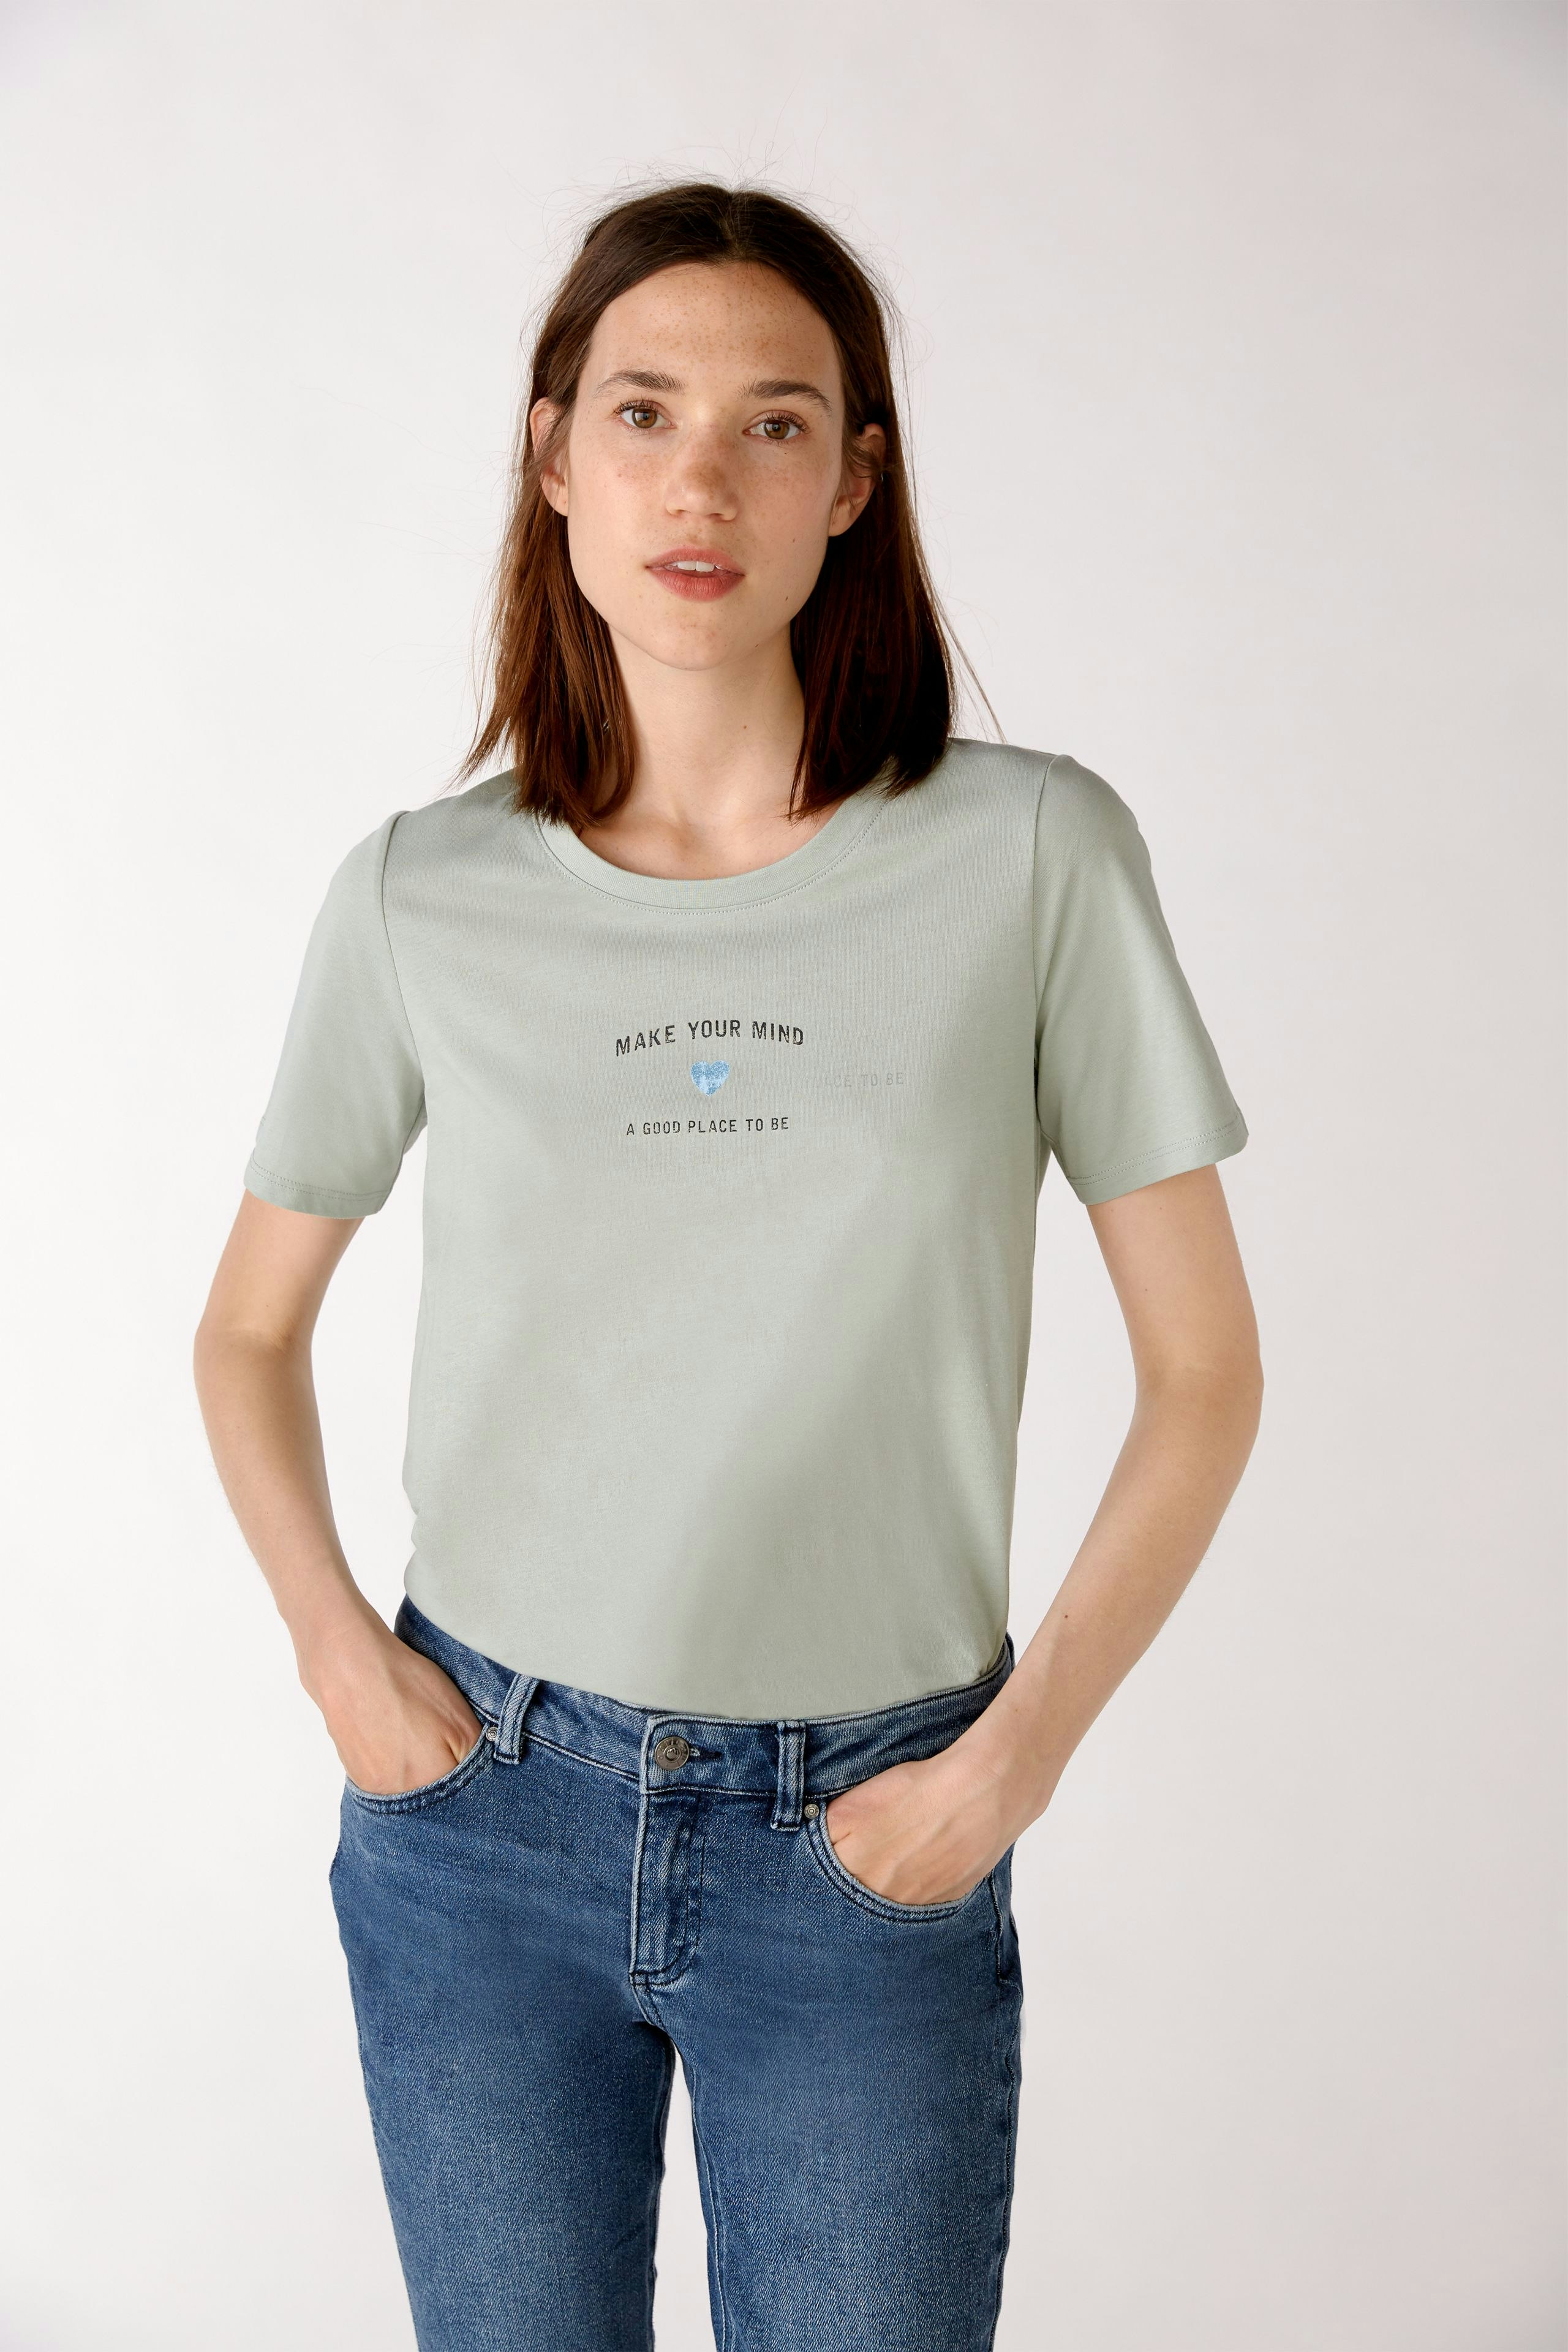 Oui Netzshirt creme Casual-Look Mode Shirts Netzshirts 